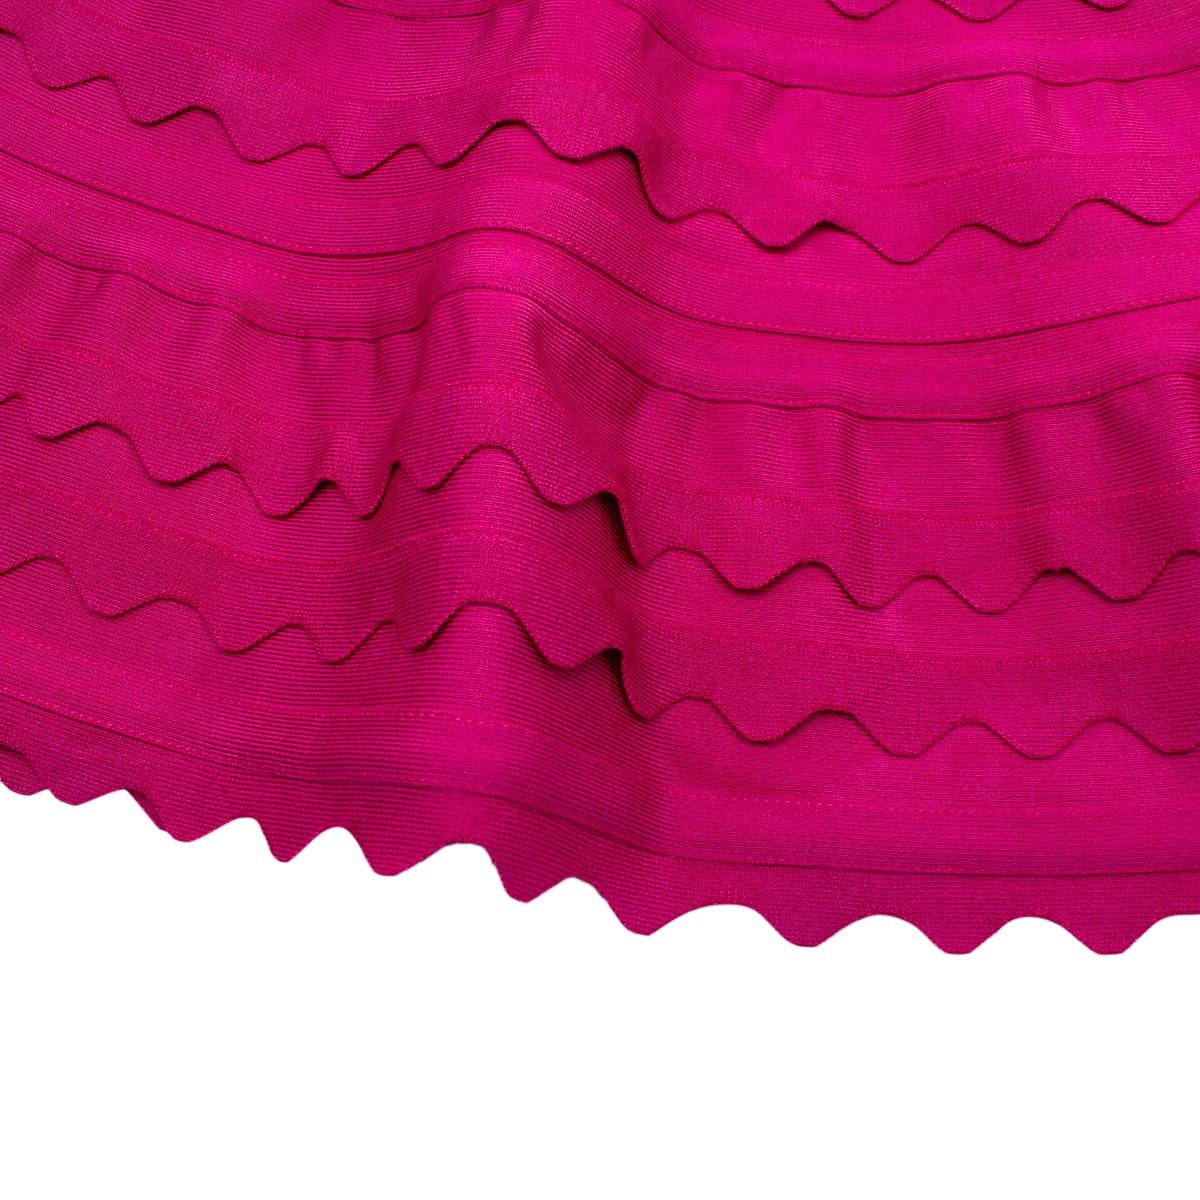 Herve Leger Nikayla Scalloped Edge Caprice Pink Dress  - Us size 6 For Sale 2